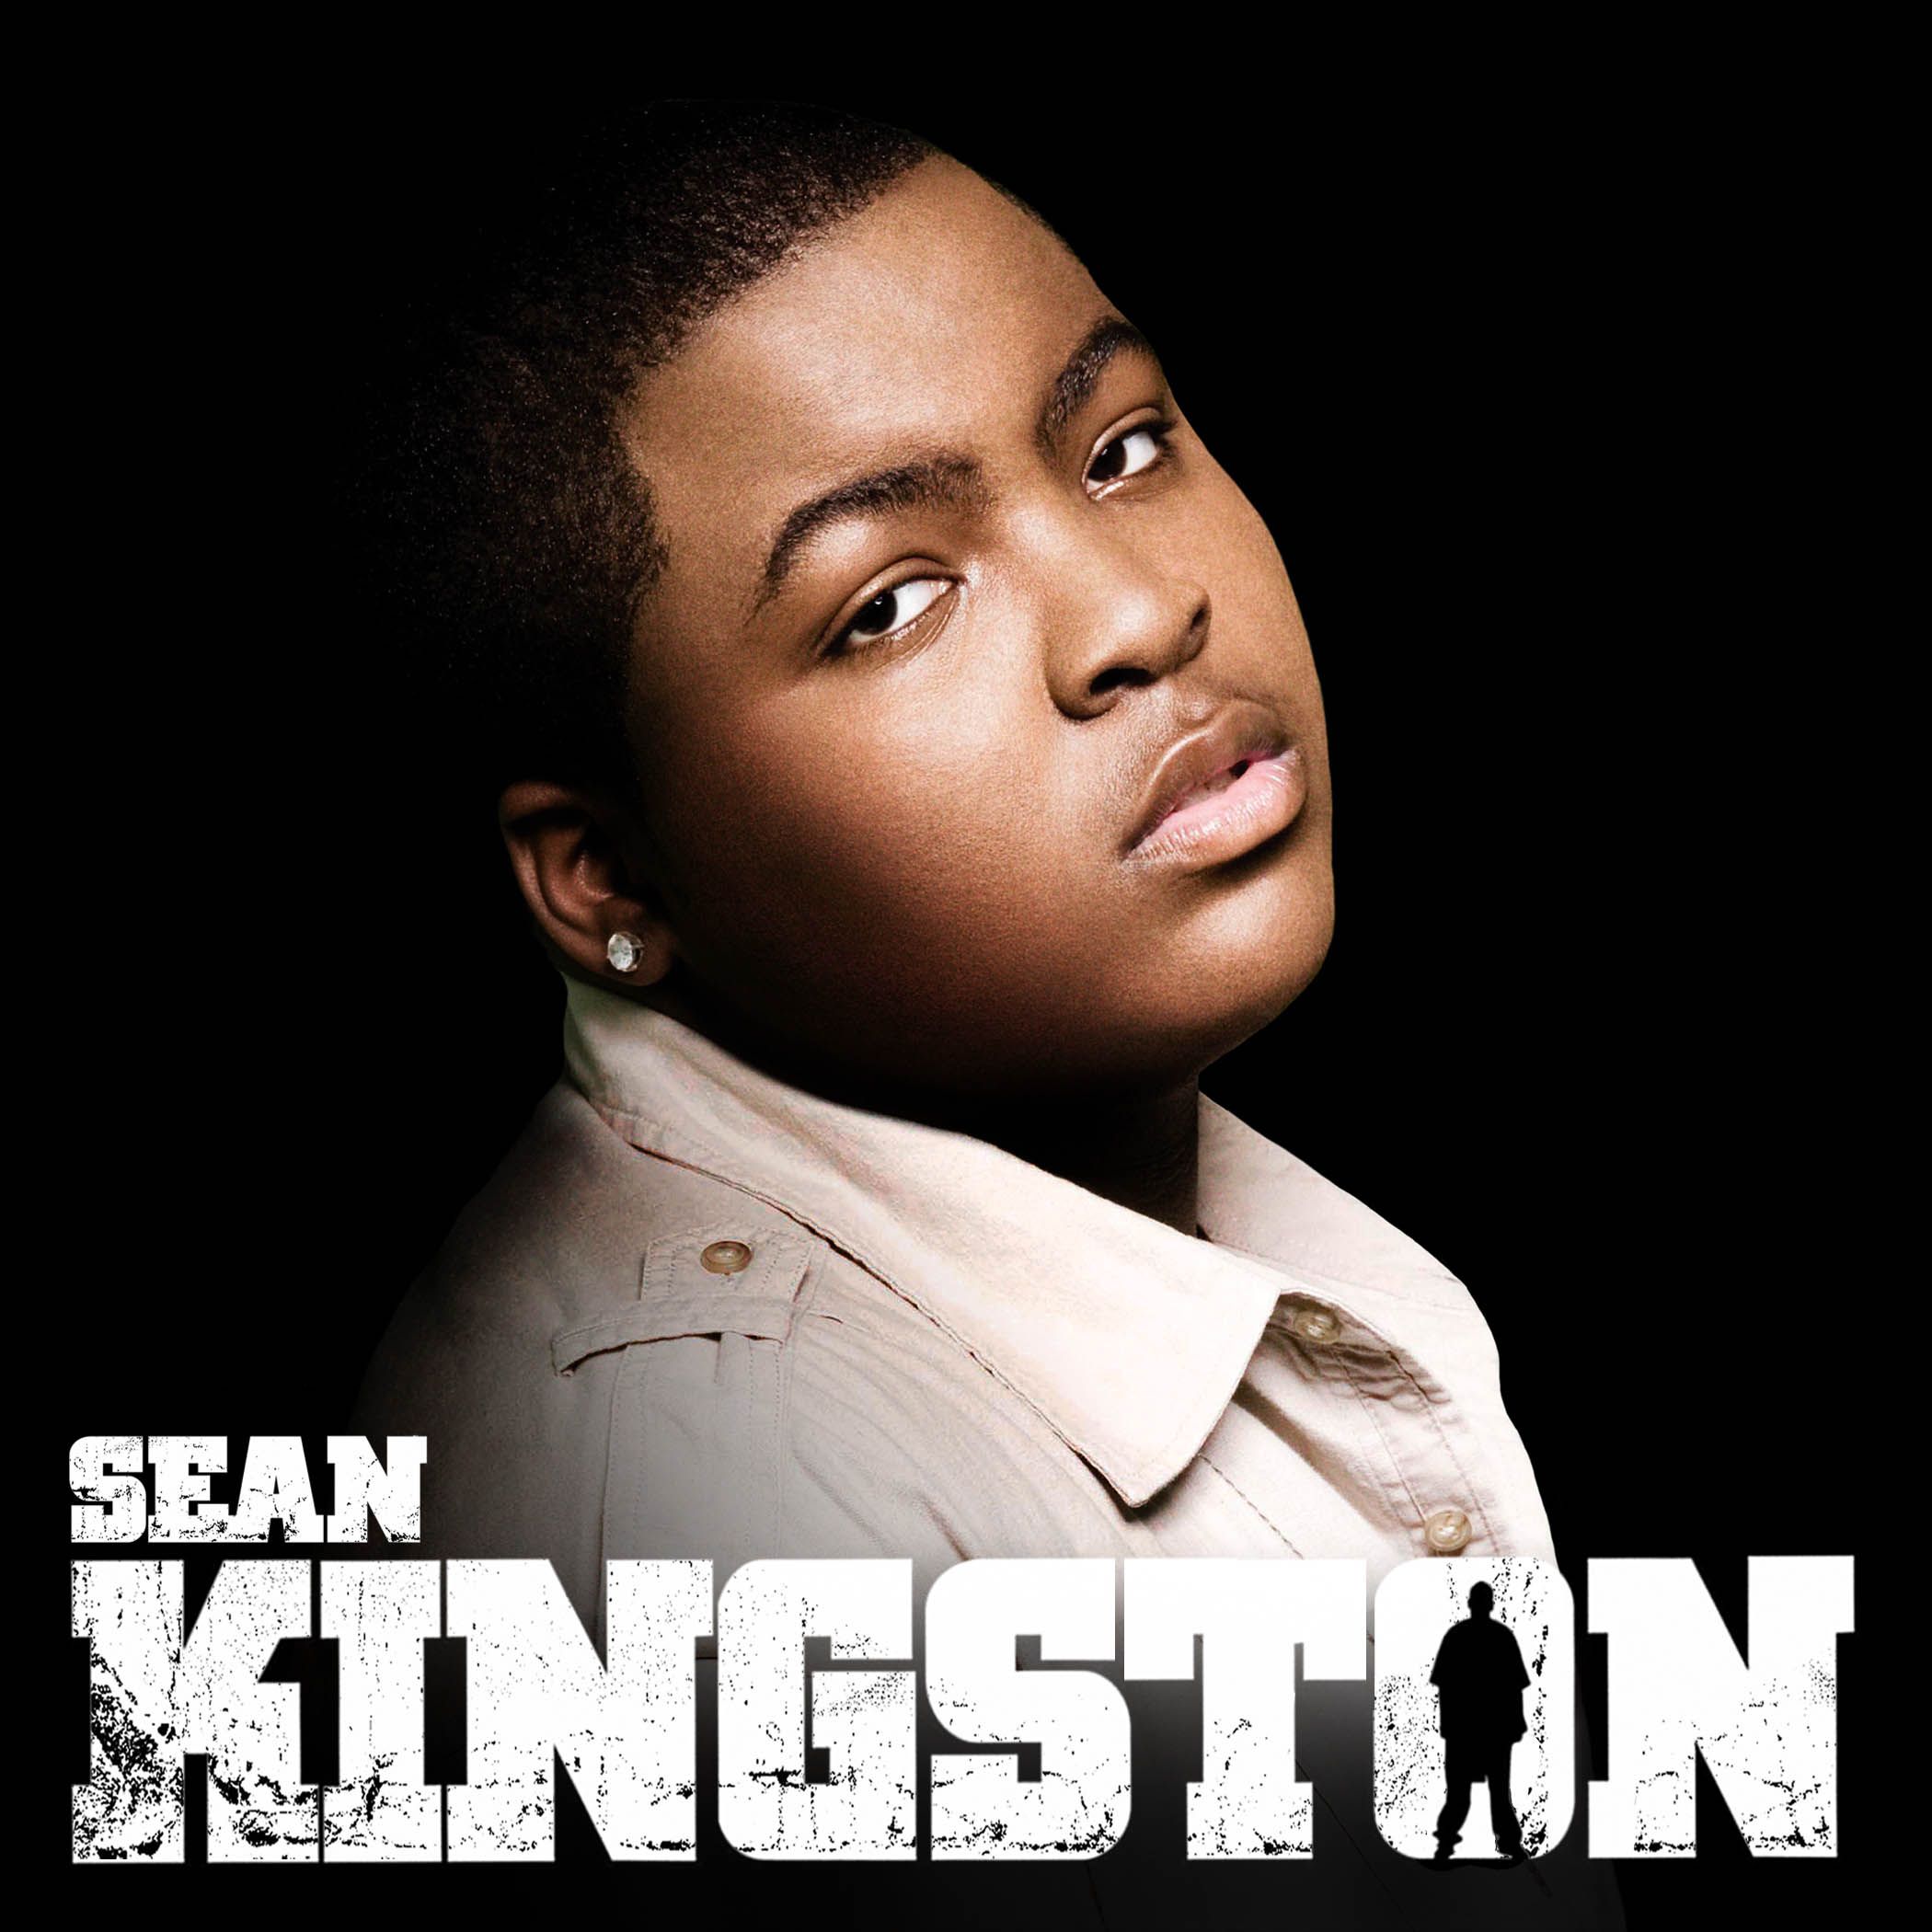 Sean Kingston Background → Celebrities Gallery